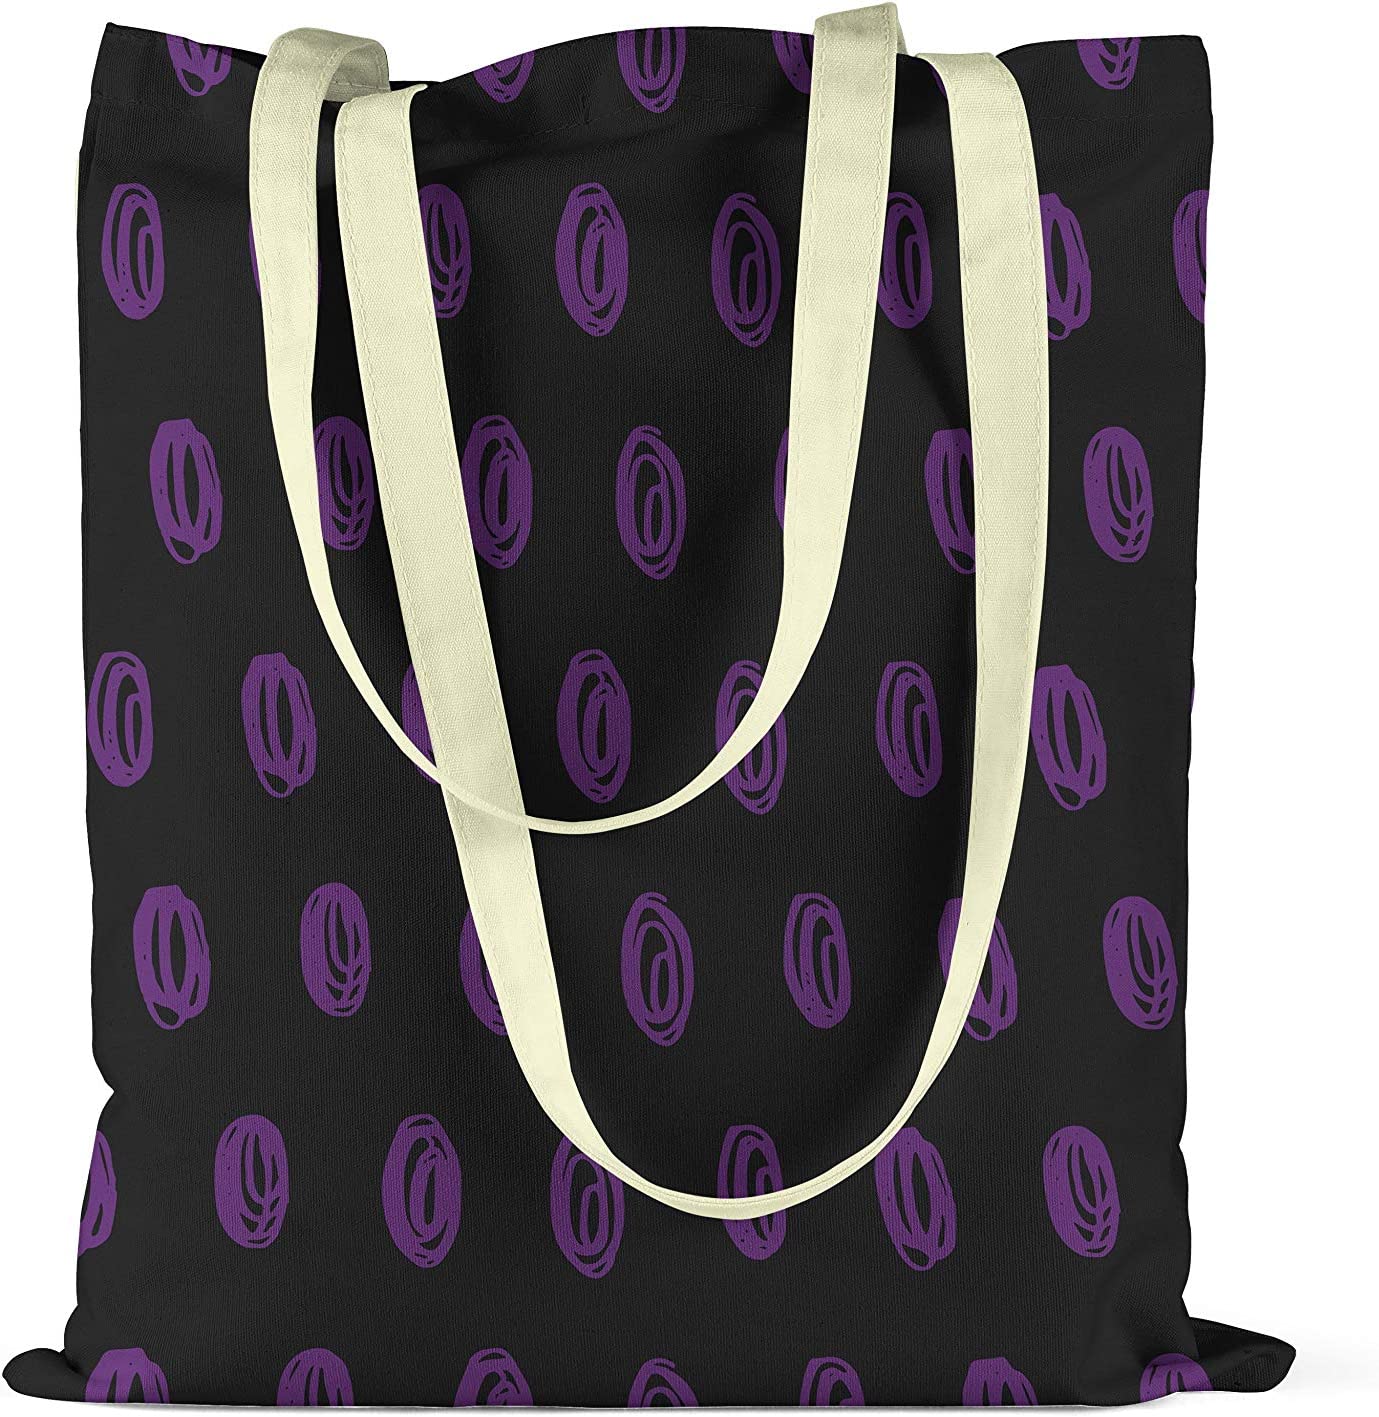 Bonamaison Purple Spiral Design Printed Light Grey Tote Bag 34 x 40cm RRP £5.99 CLEARANCE XL £3.99